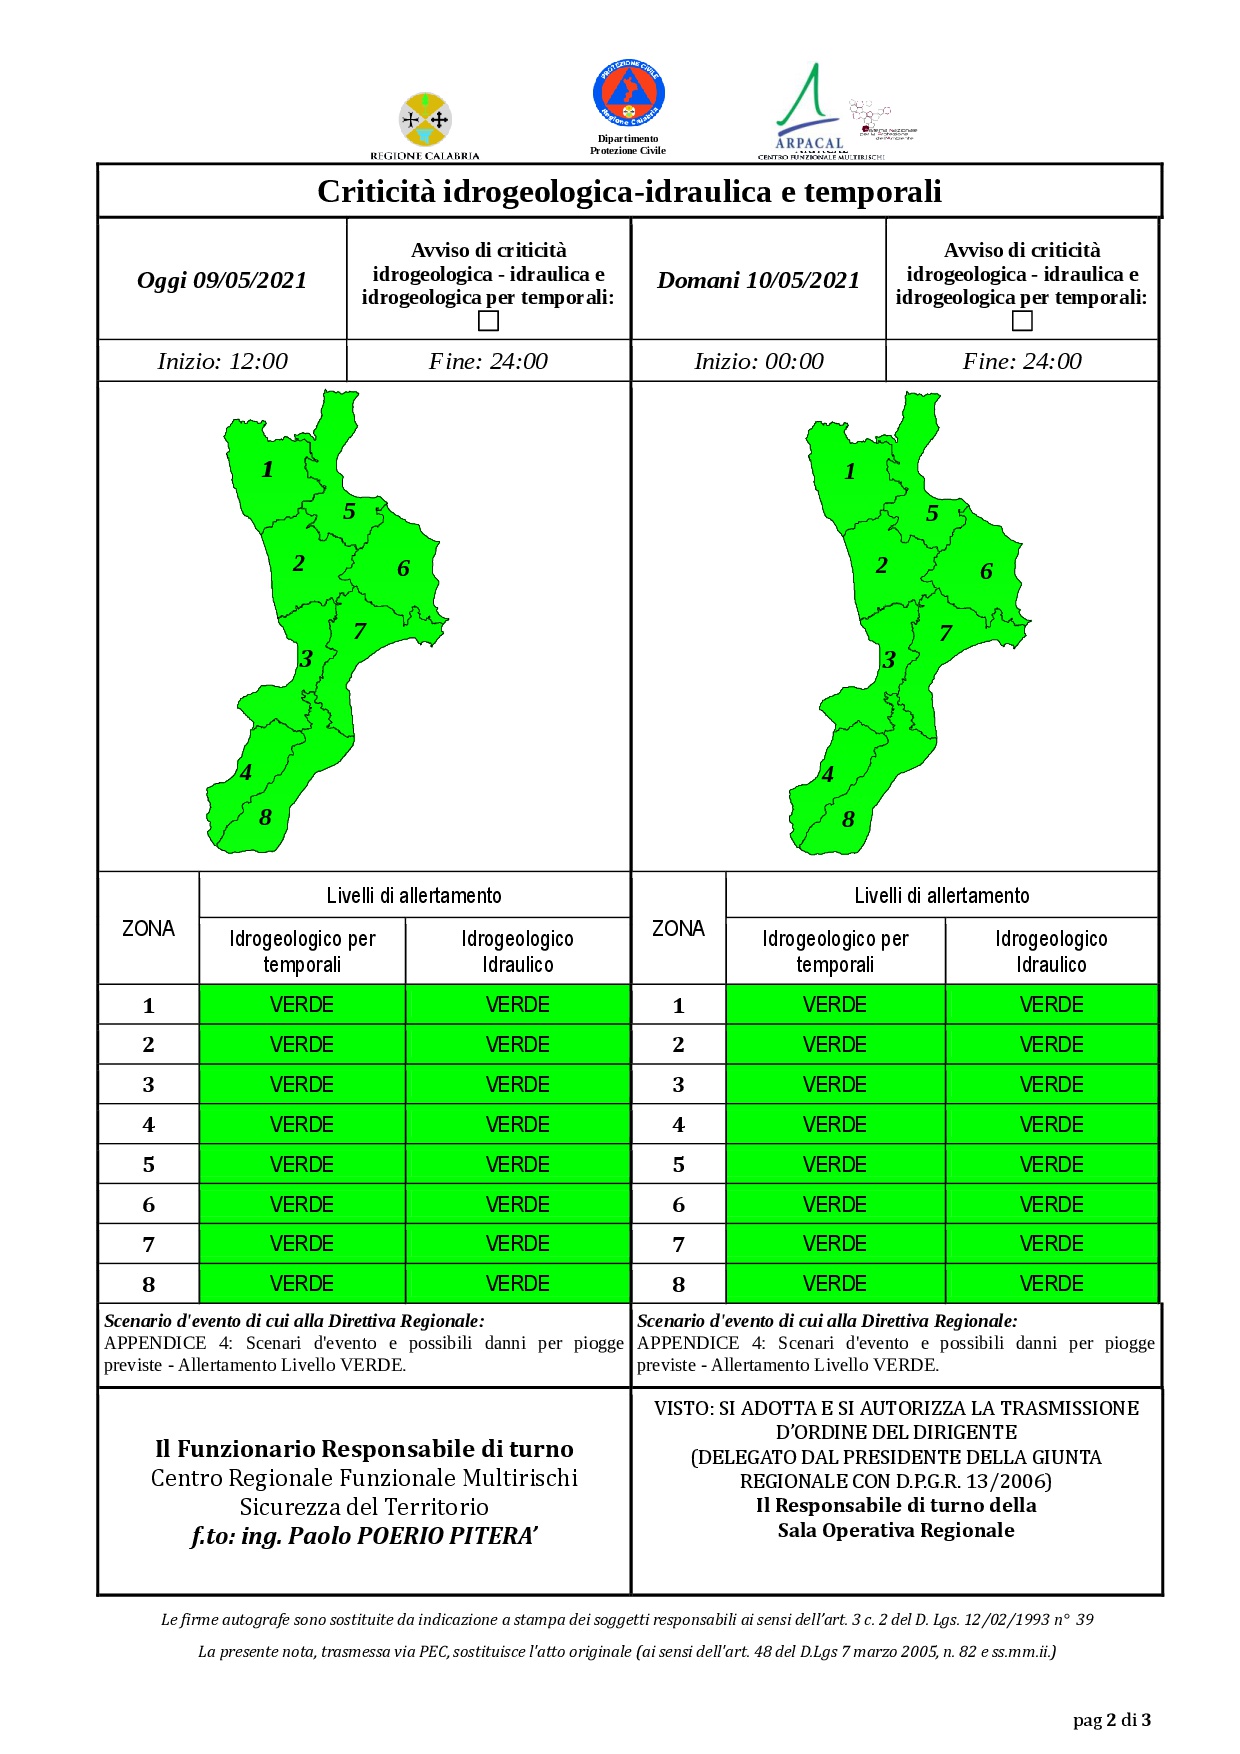 Criticità idrogeologica-idraulica e temporali in Calabria 09-05-2021